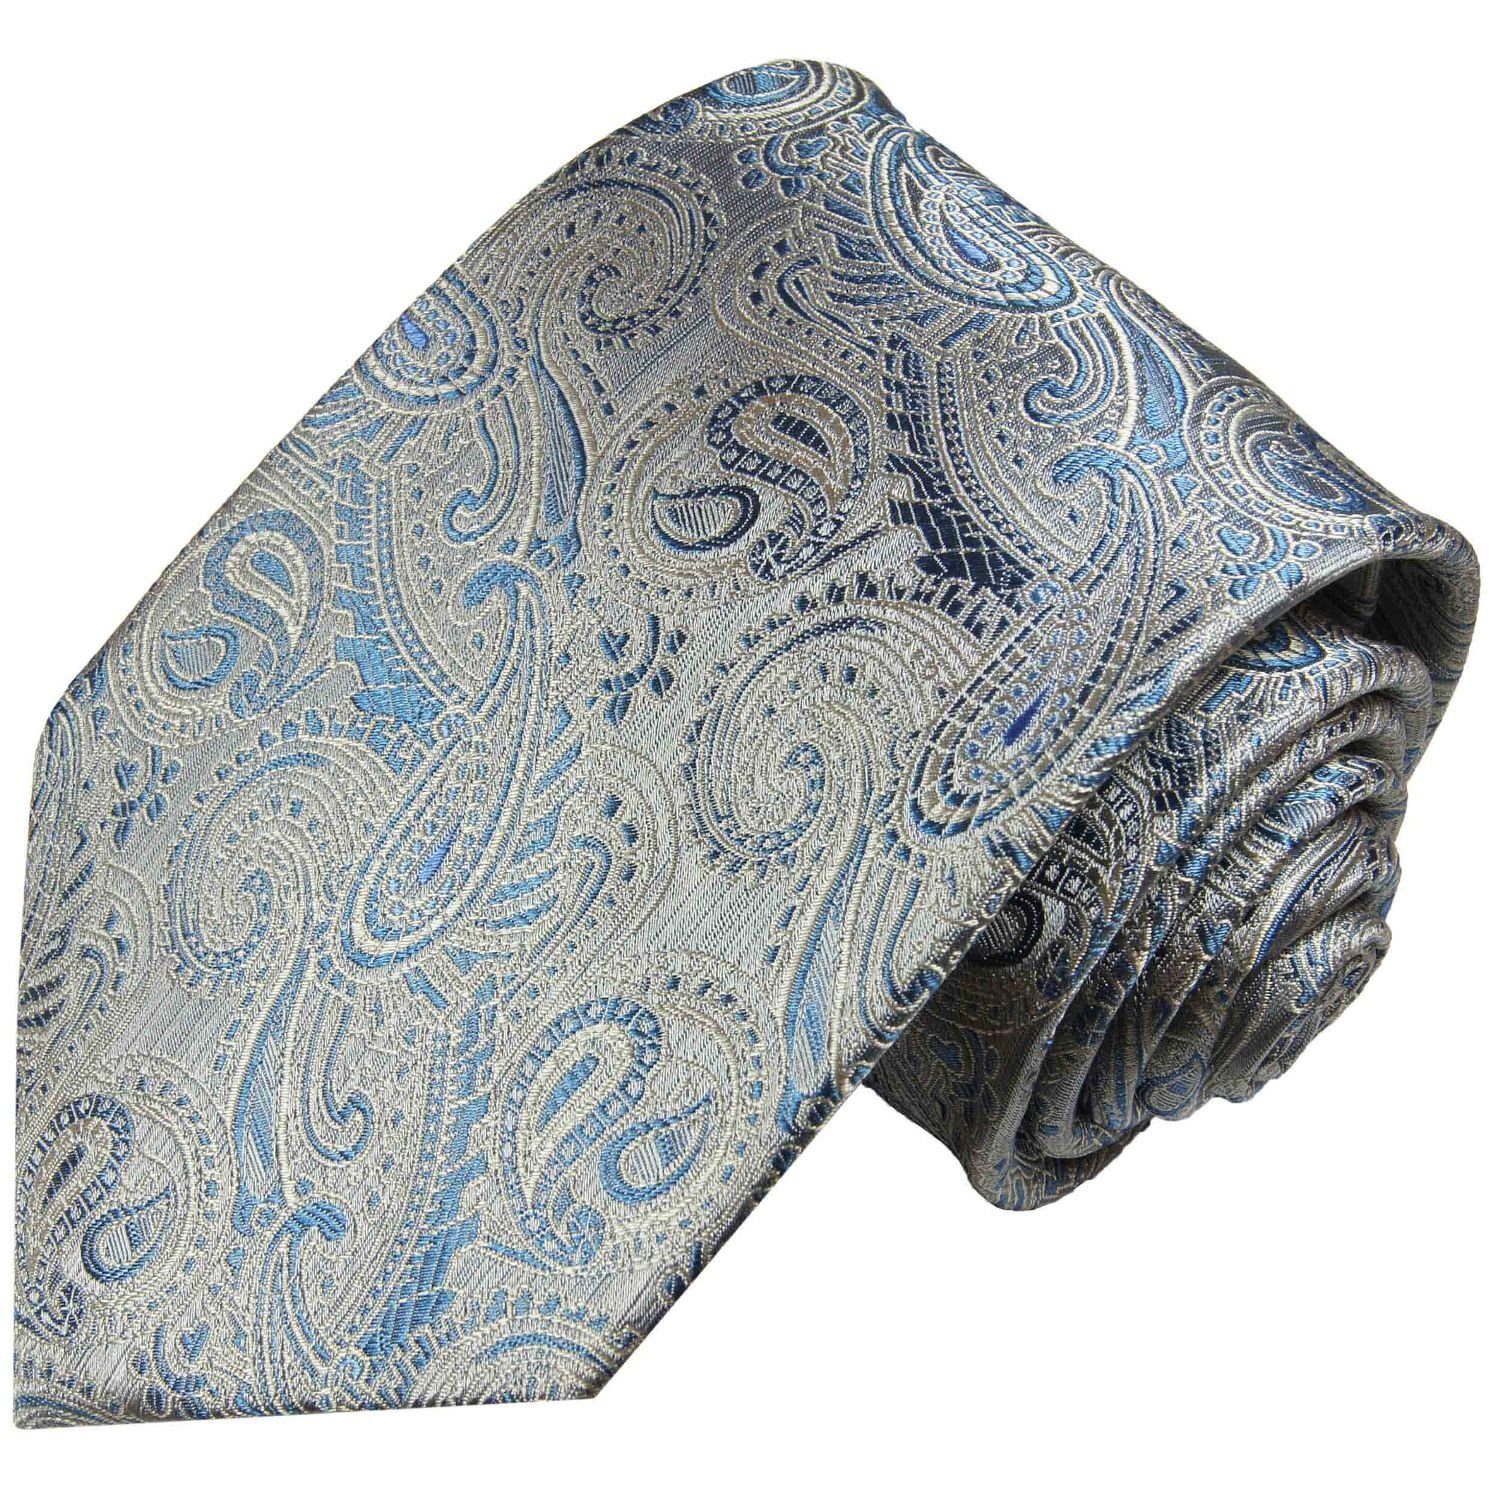 Paul Malone Krawatte Herren Seidenkrawatte Designer Schlips paisley brokat 100% Seide Schmal (6cm), blau jeansblau grau 2000 | Breite Krawatten